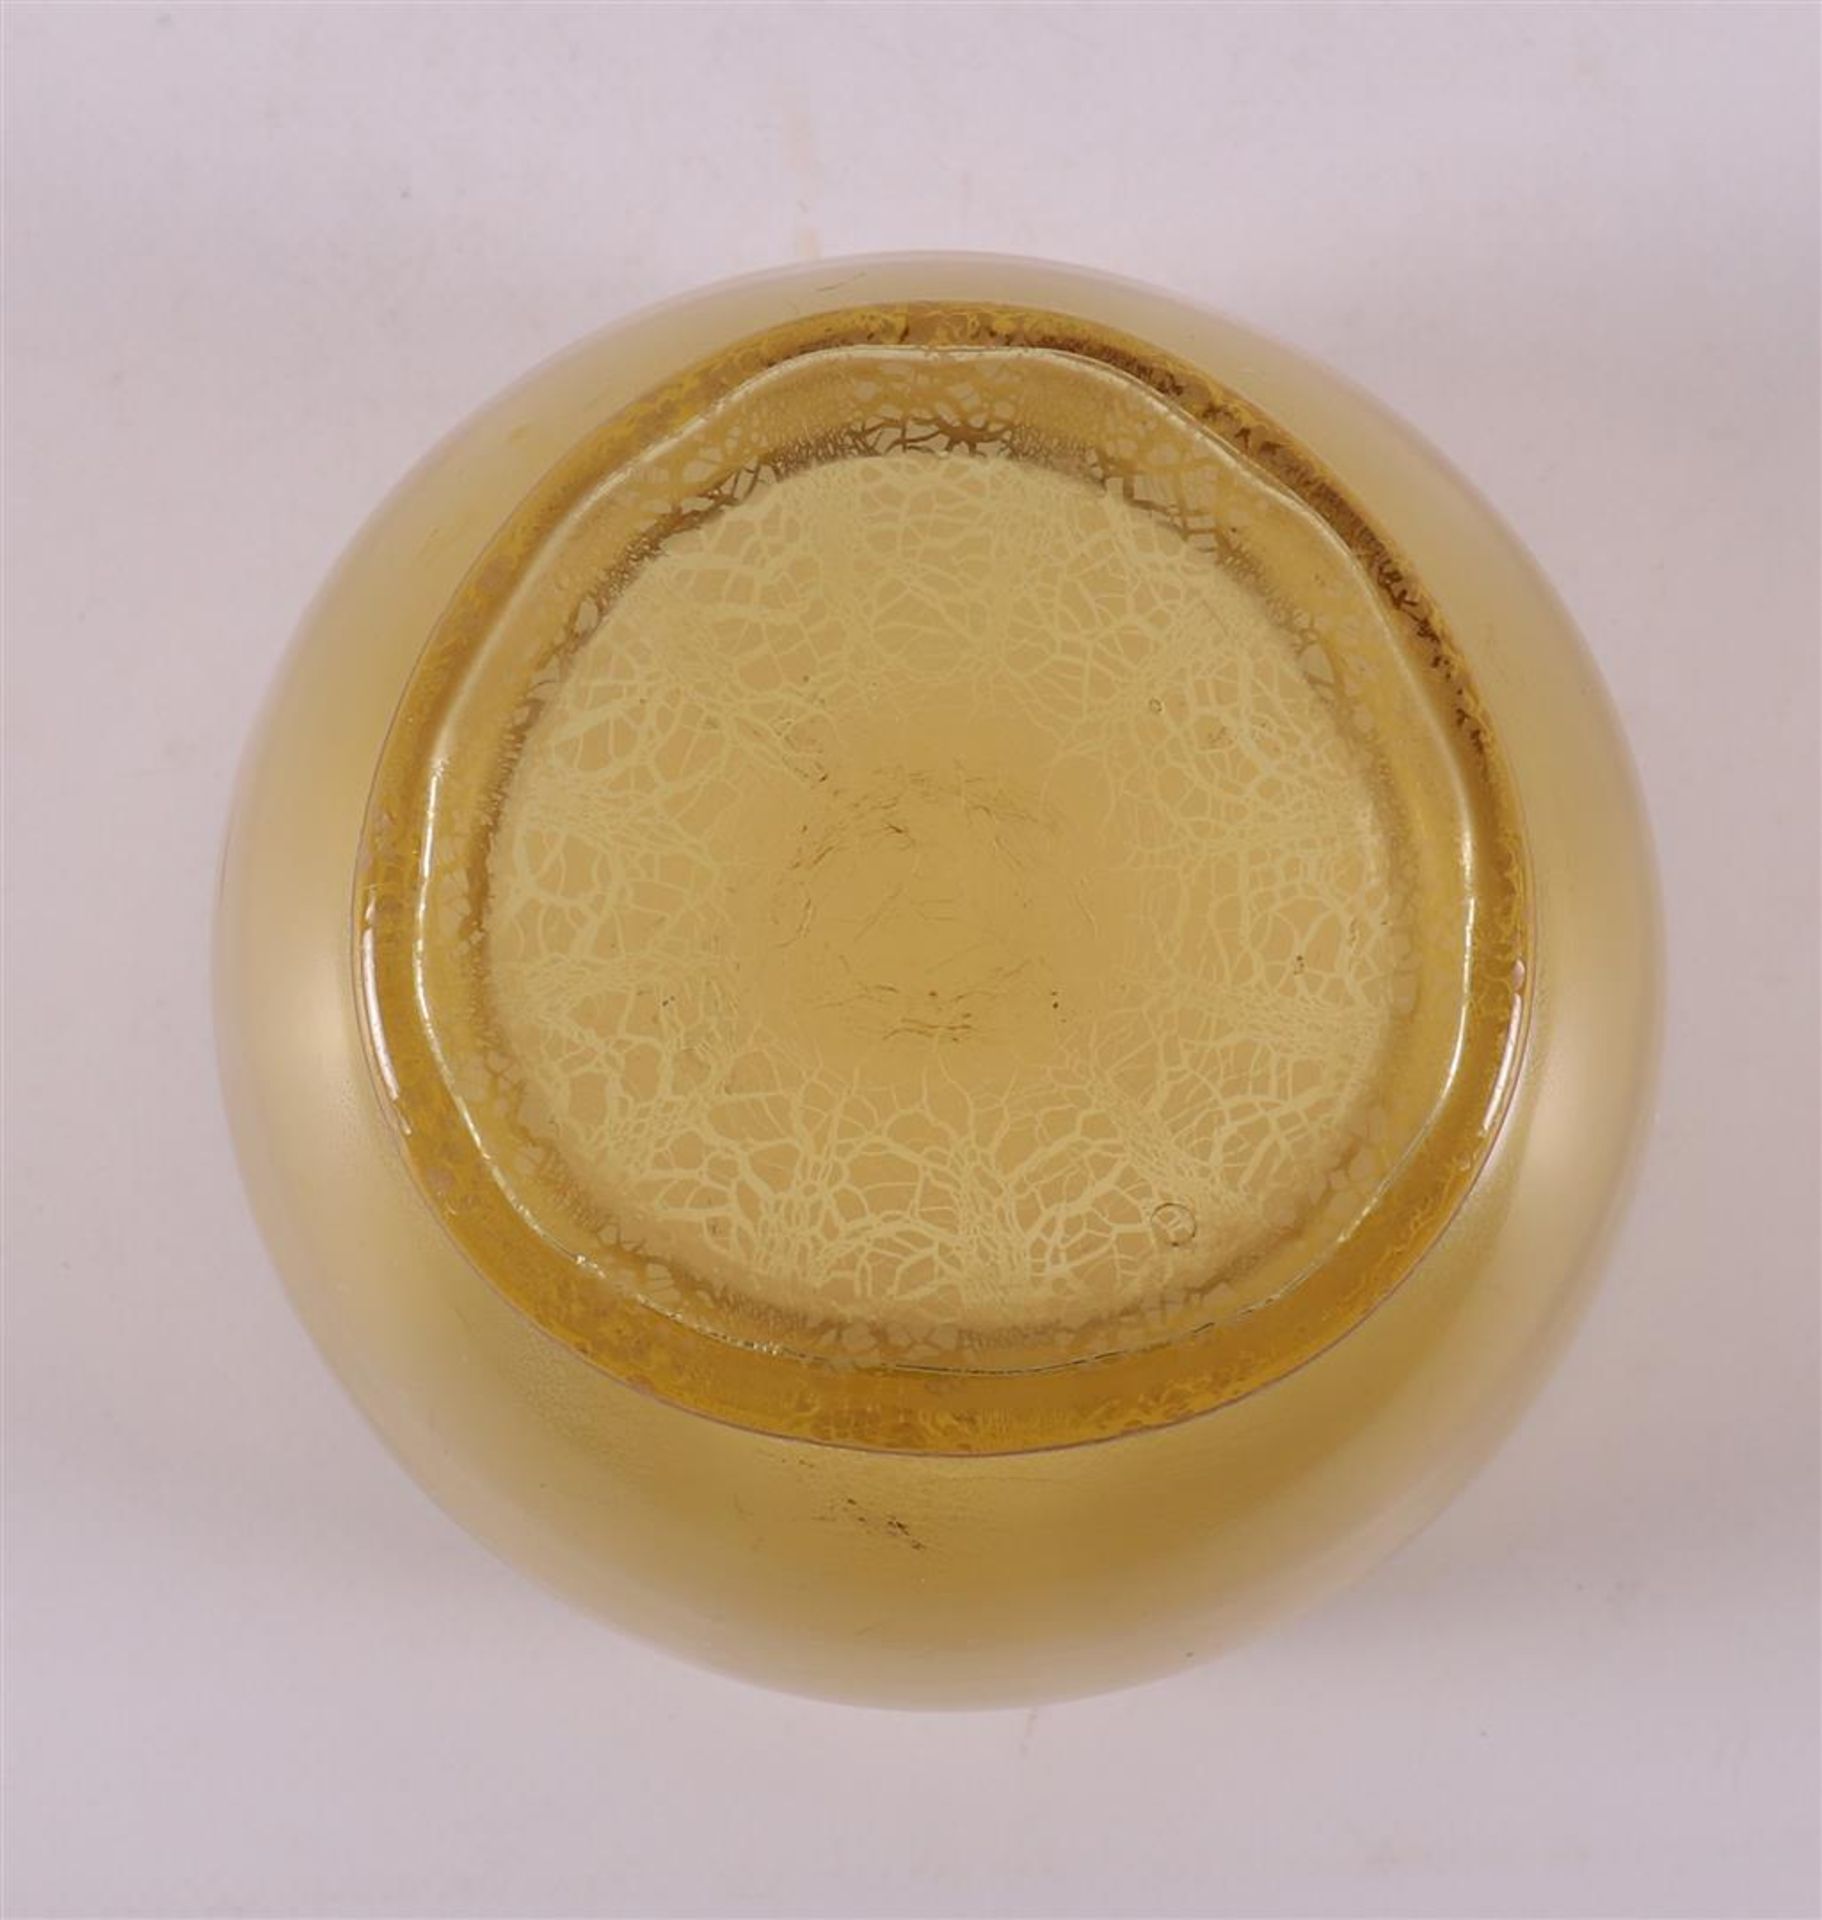 An amber glass crackle vase 'Sonoor', design: A.D. Copier. - Image 4 of 4